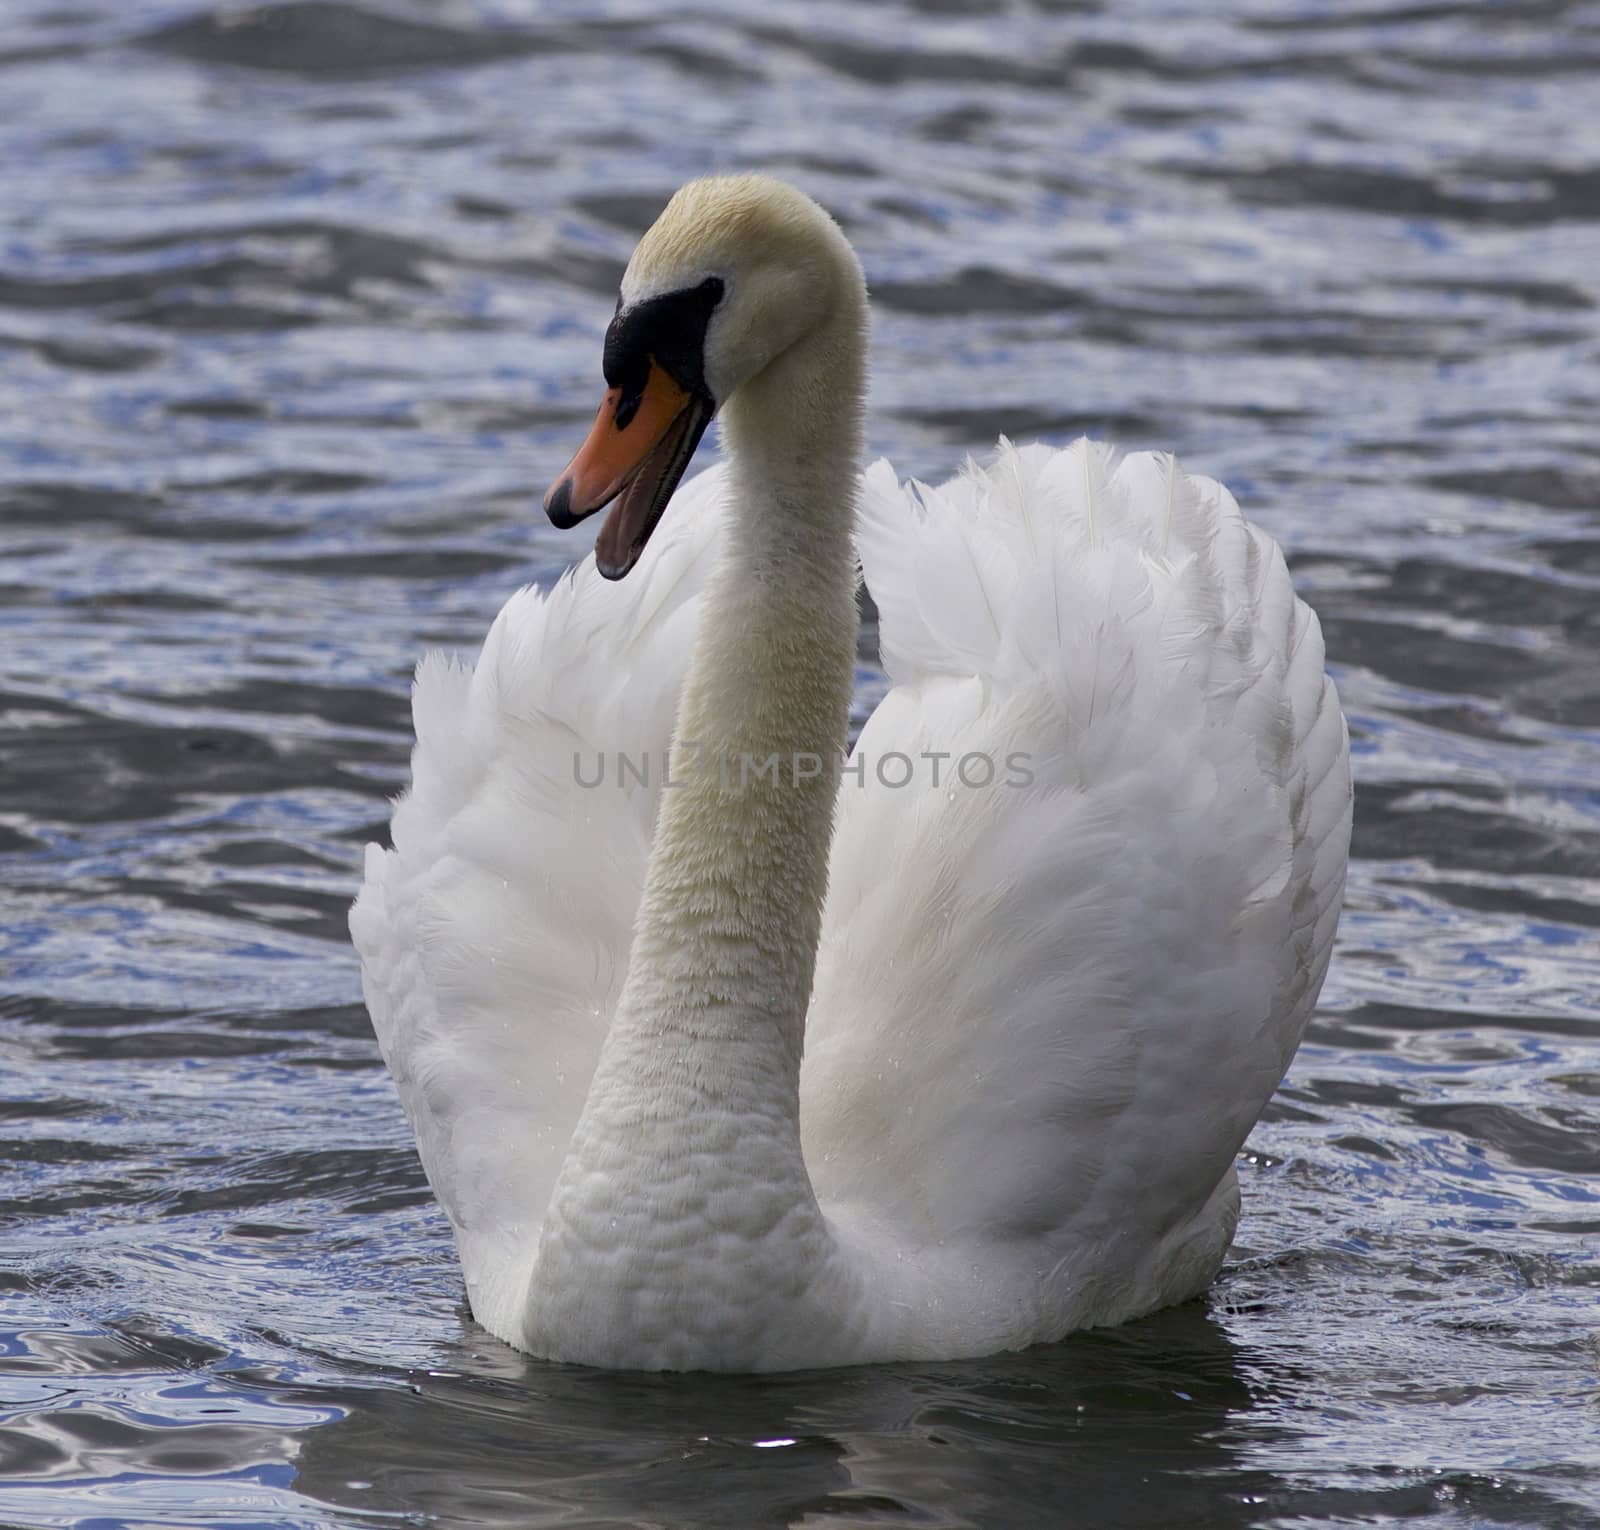 Beautiful photo of a screaming swan